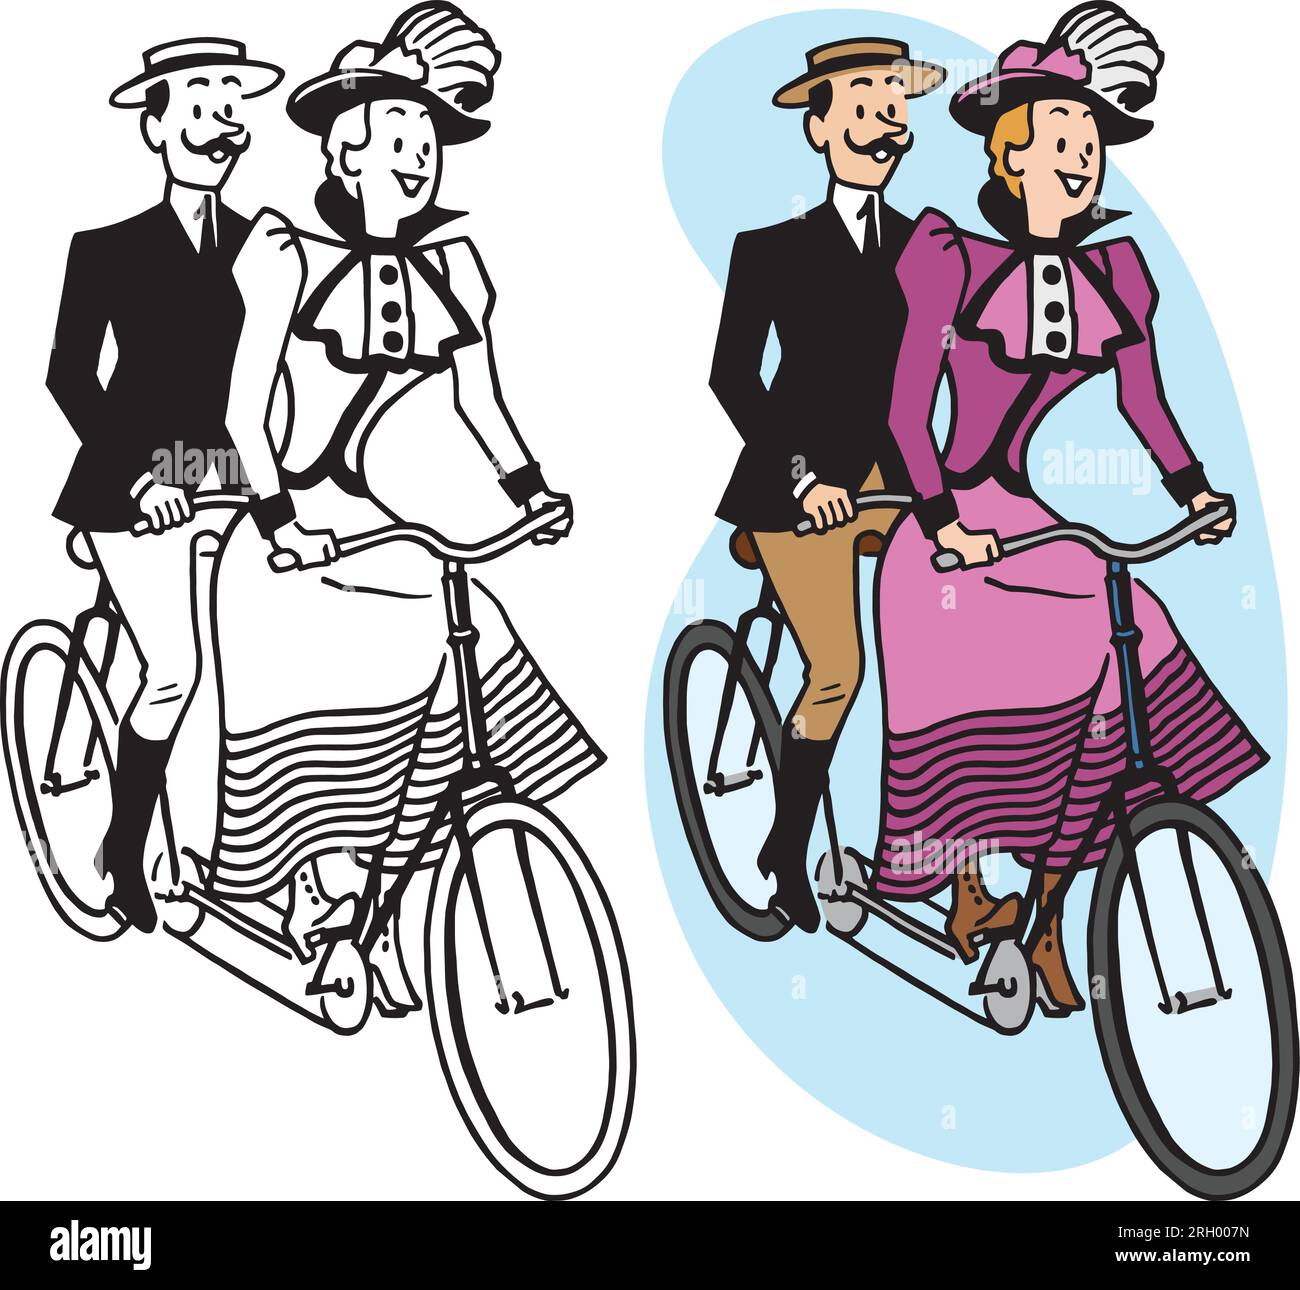 Kids Tandem Bike for Boys Girls — The Lovin Sisters